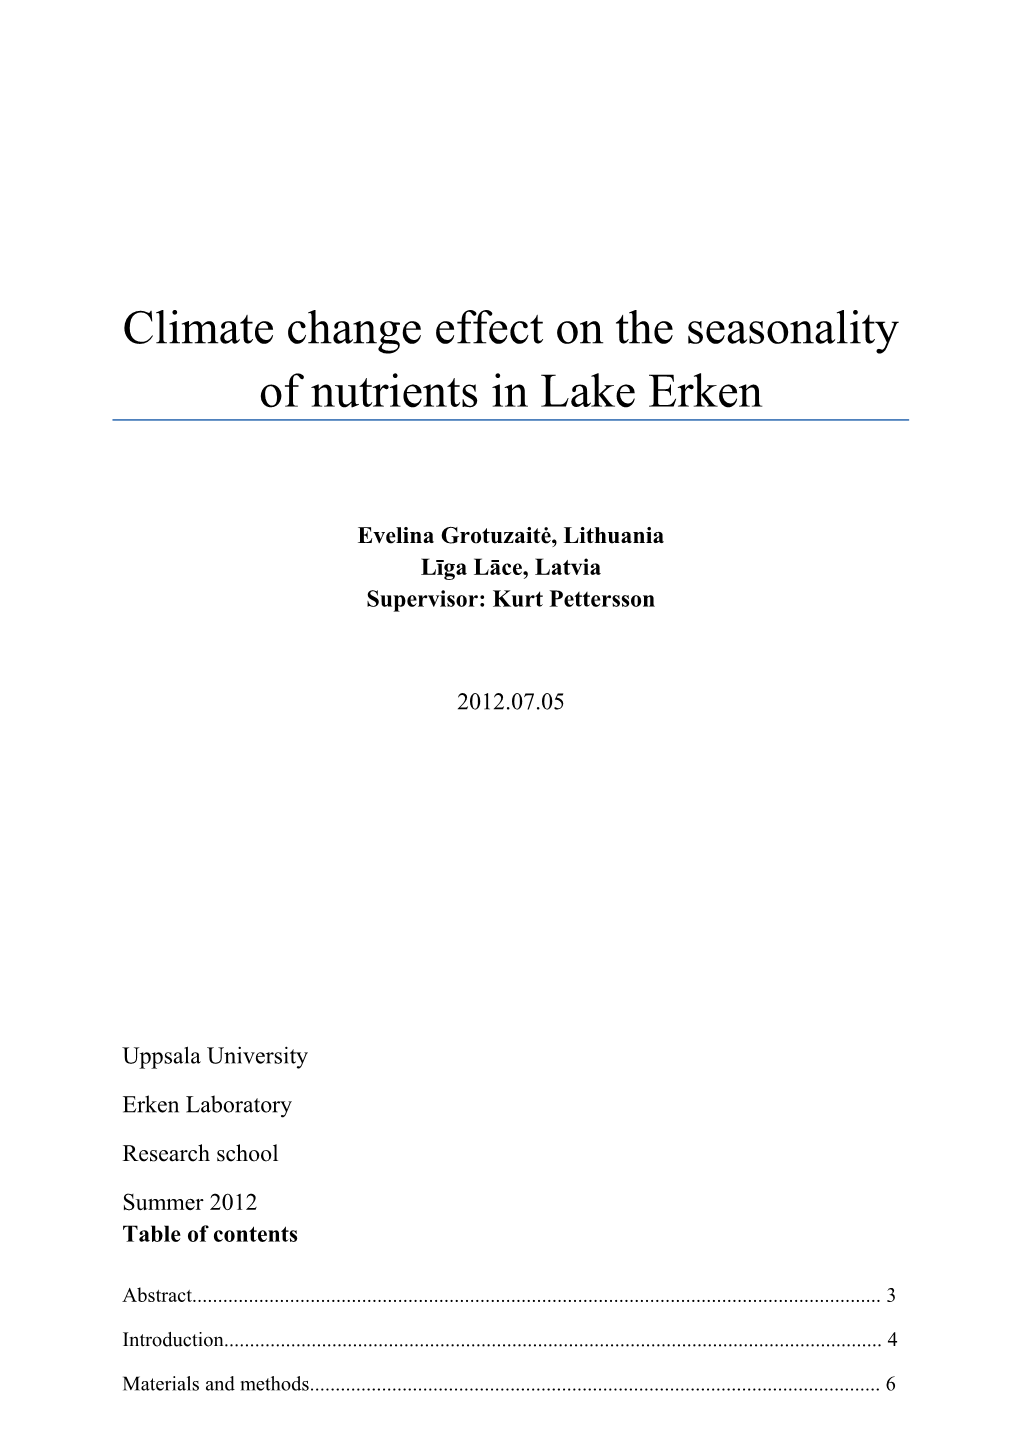 Climate Change Effect on the Seasonality of Nutrients in Lake Erken